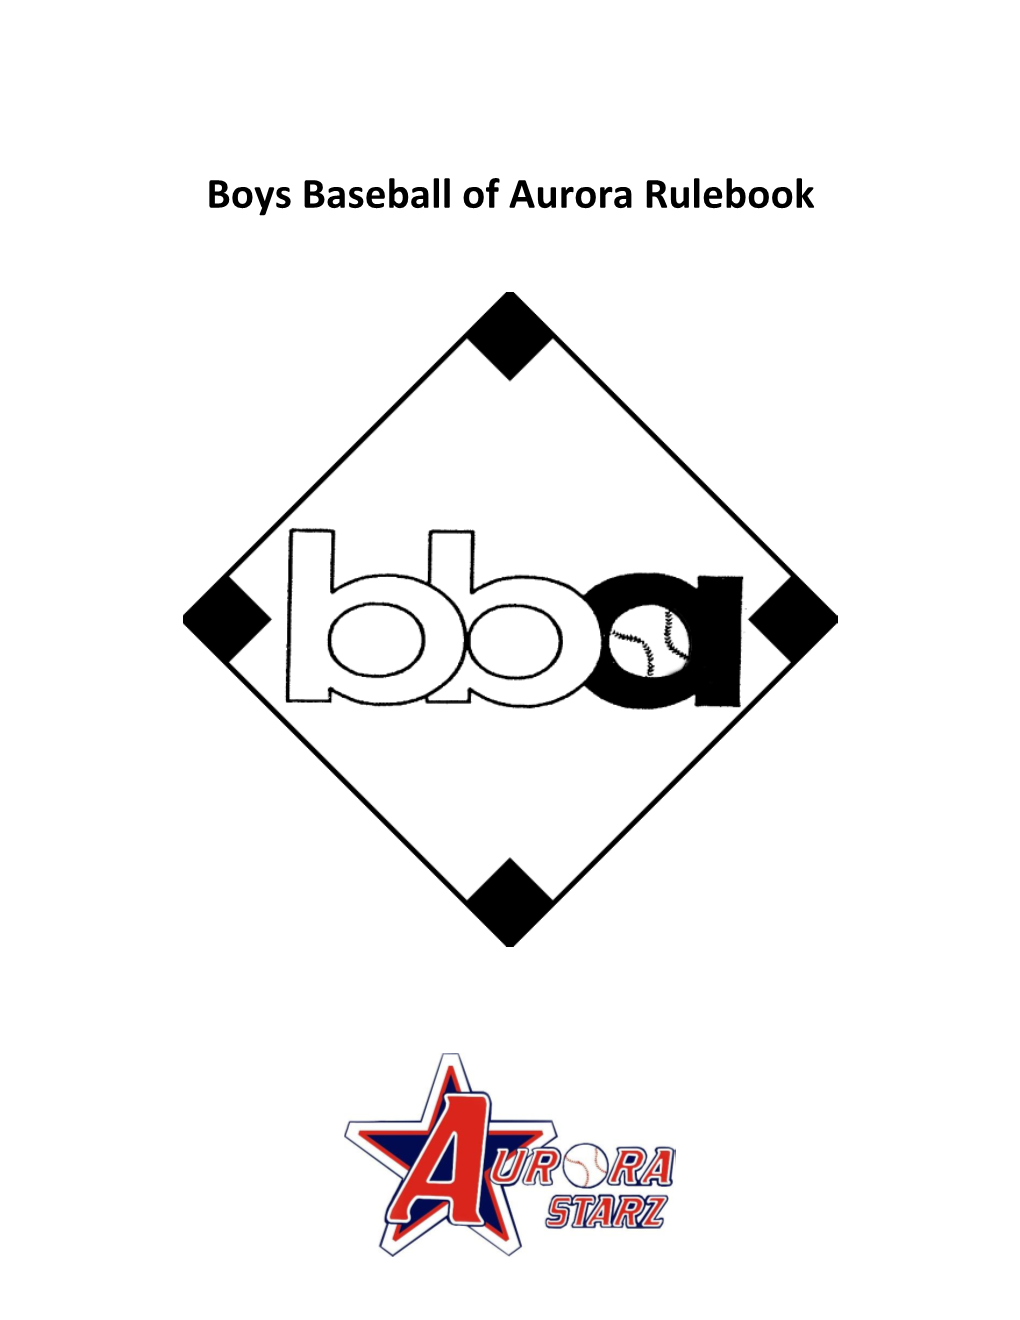 Boys Baseball of Aurora Rulebook